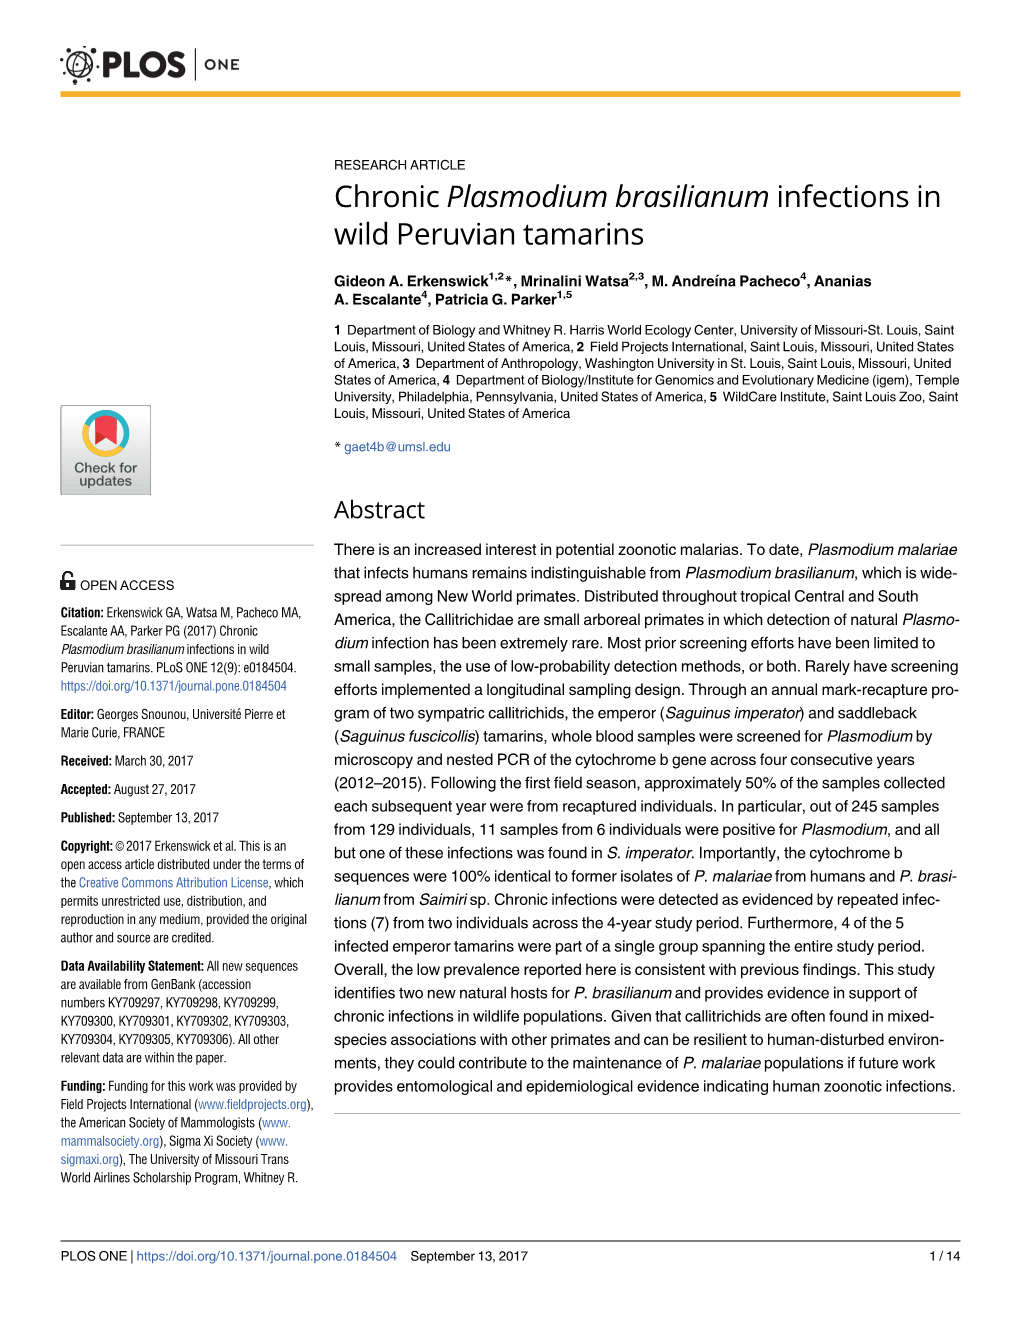 Chronic Plasmodium Brasilianum Infections in Wild Peruvian Tamarins